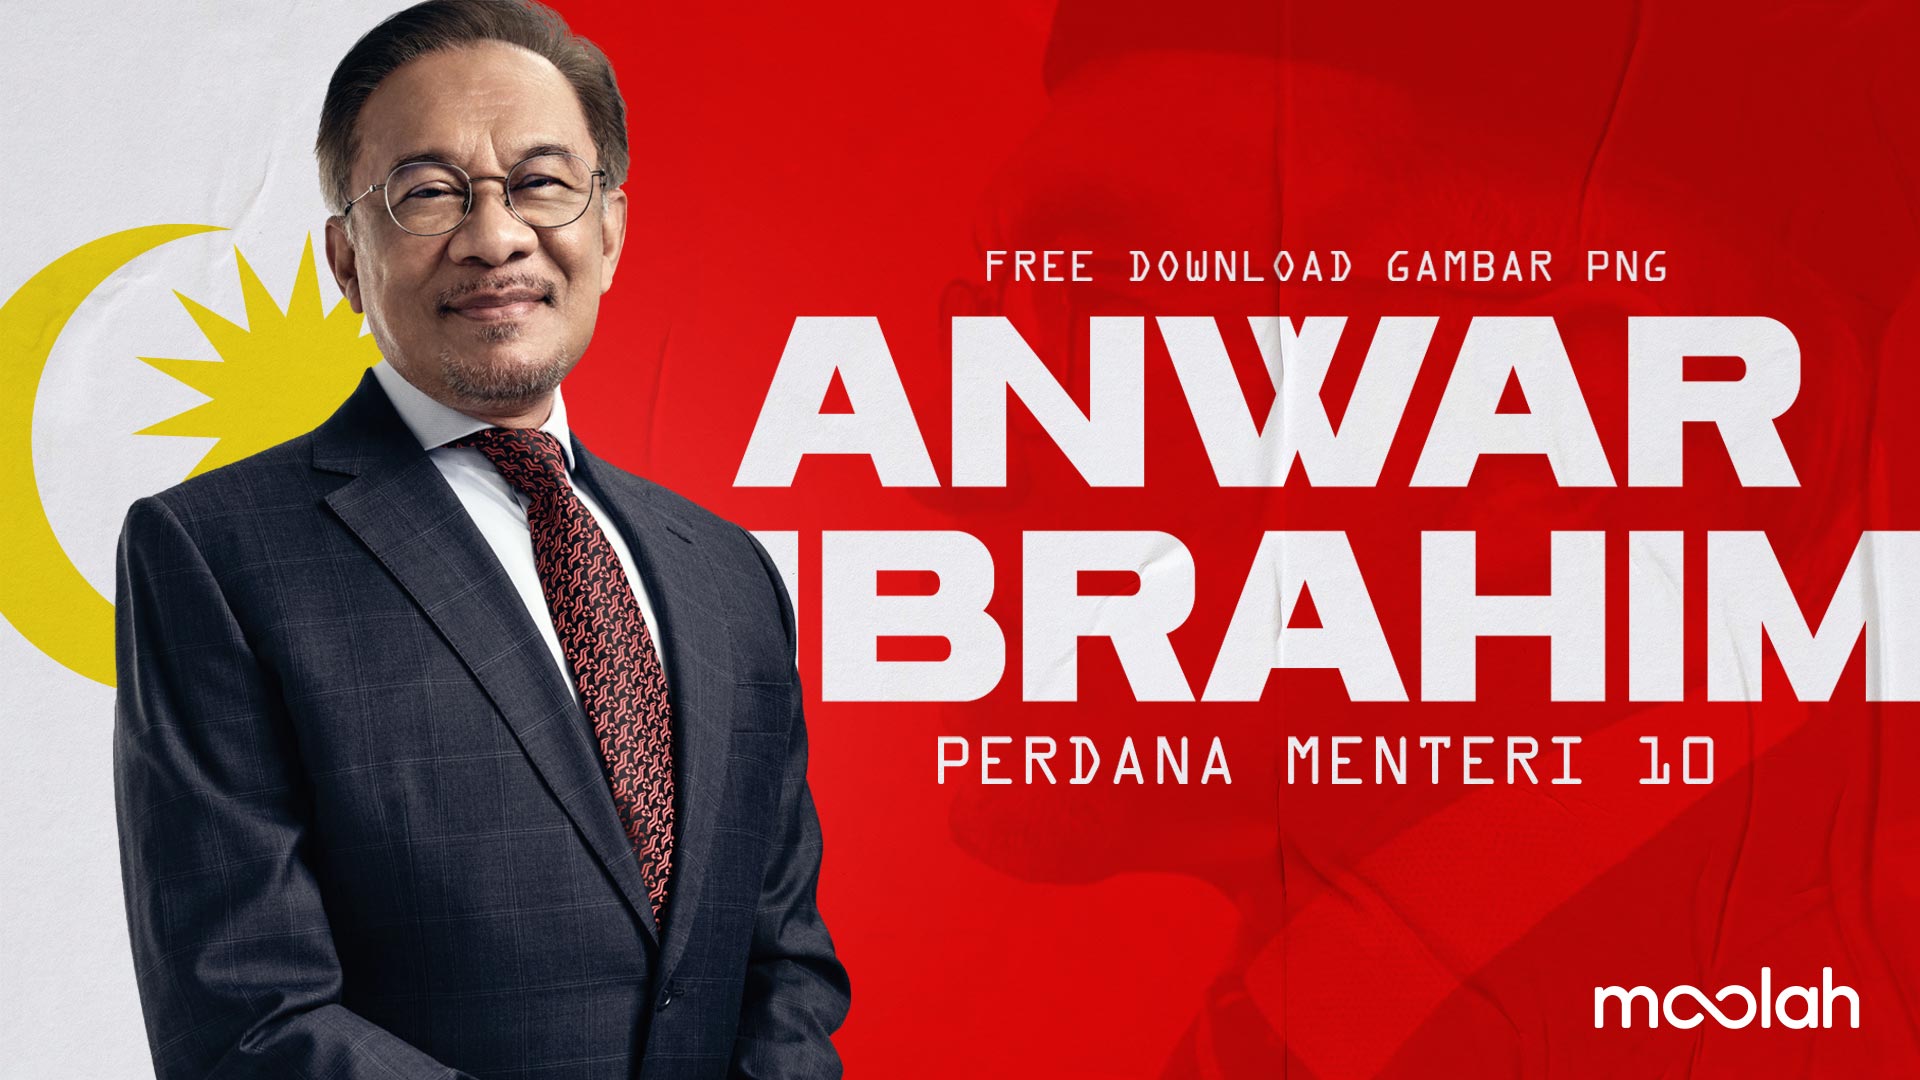 Gambar Datuk Seri Anwar Ibrahim Perdana Menteri ke-10